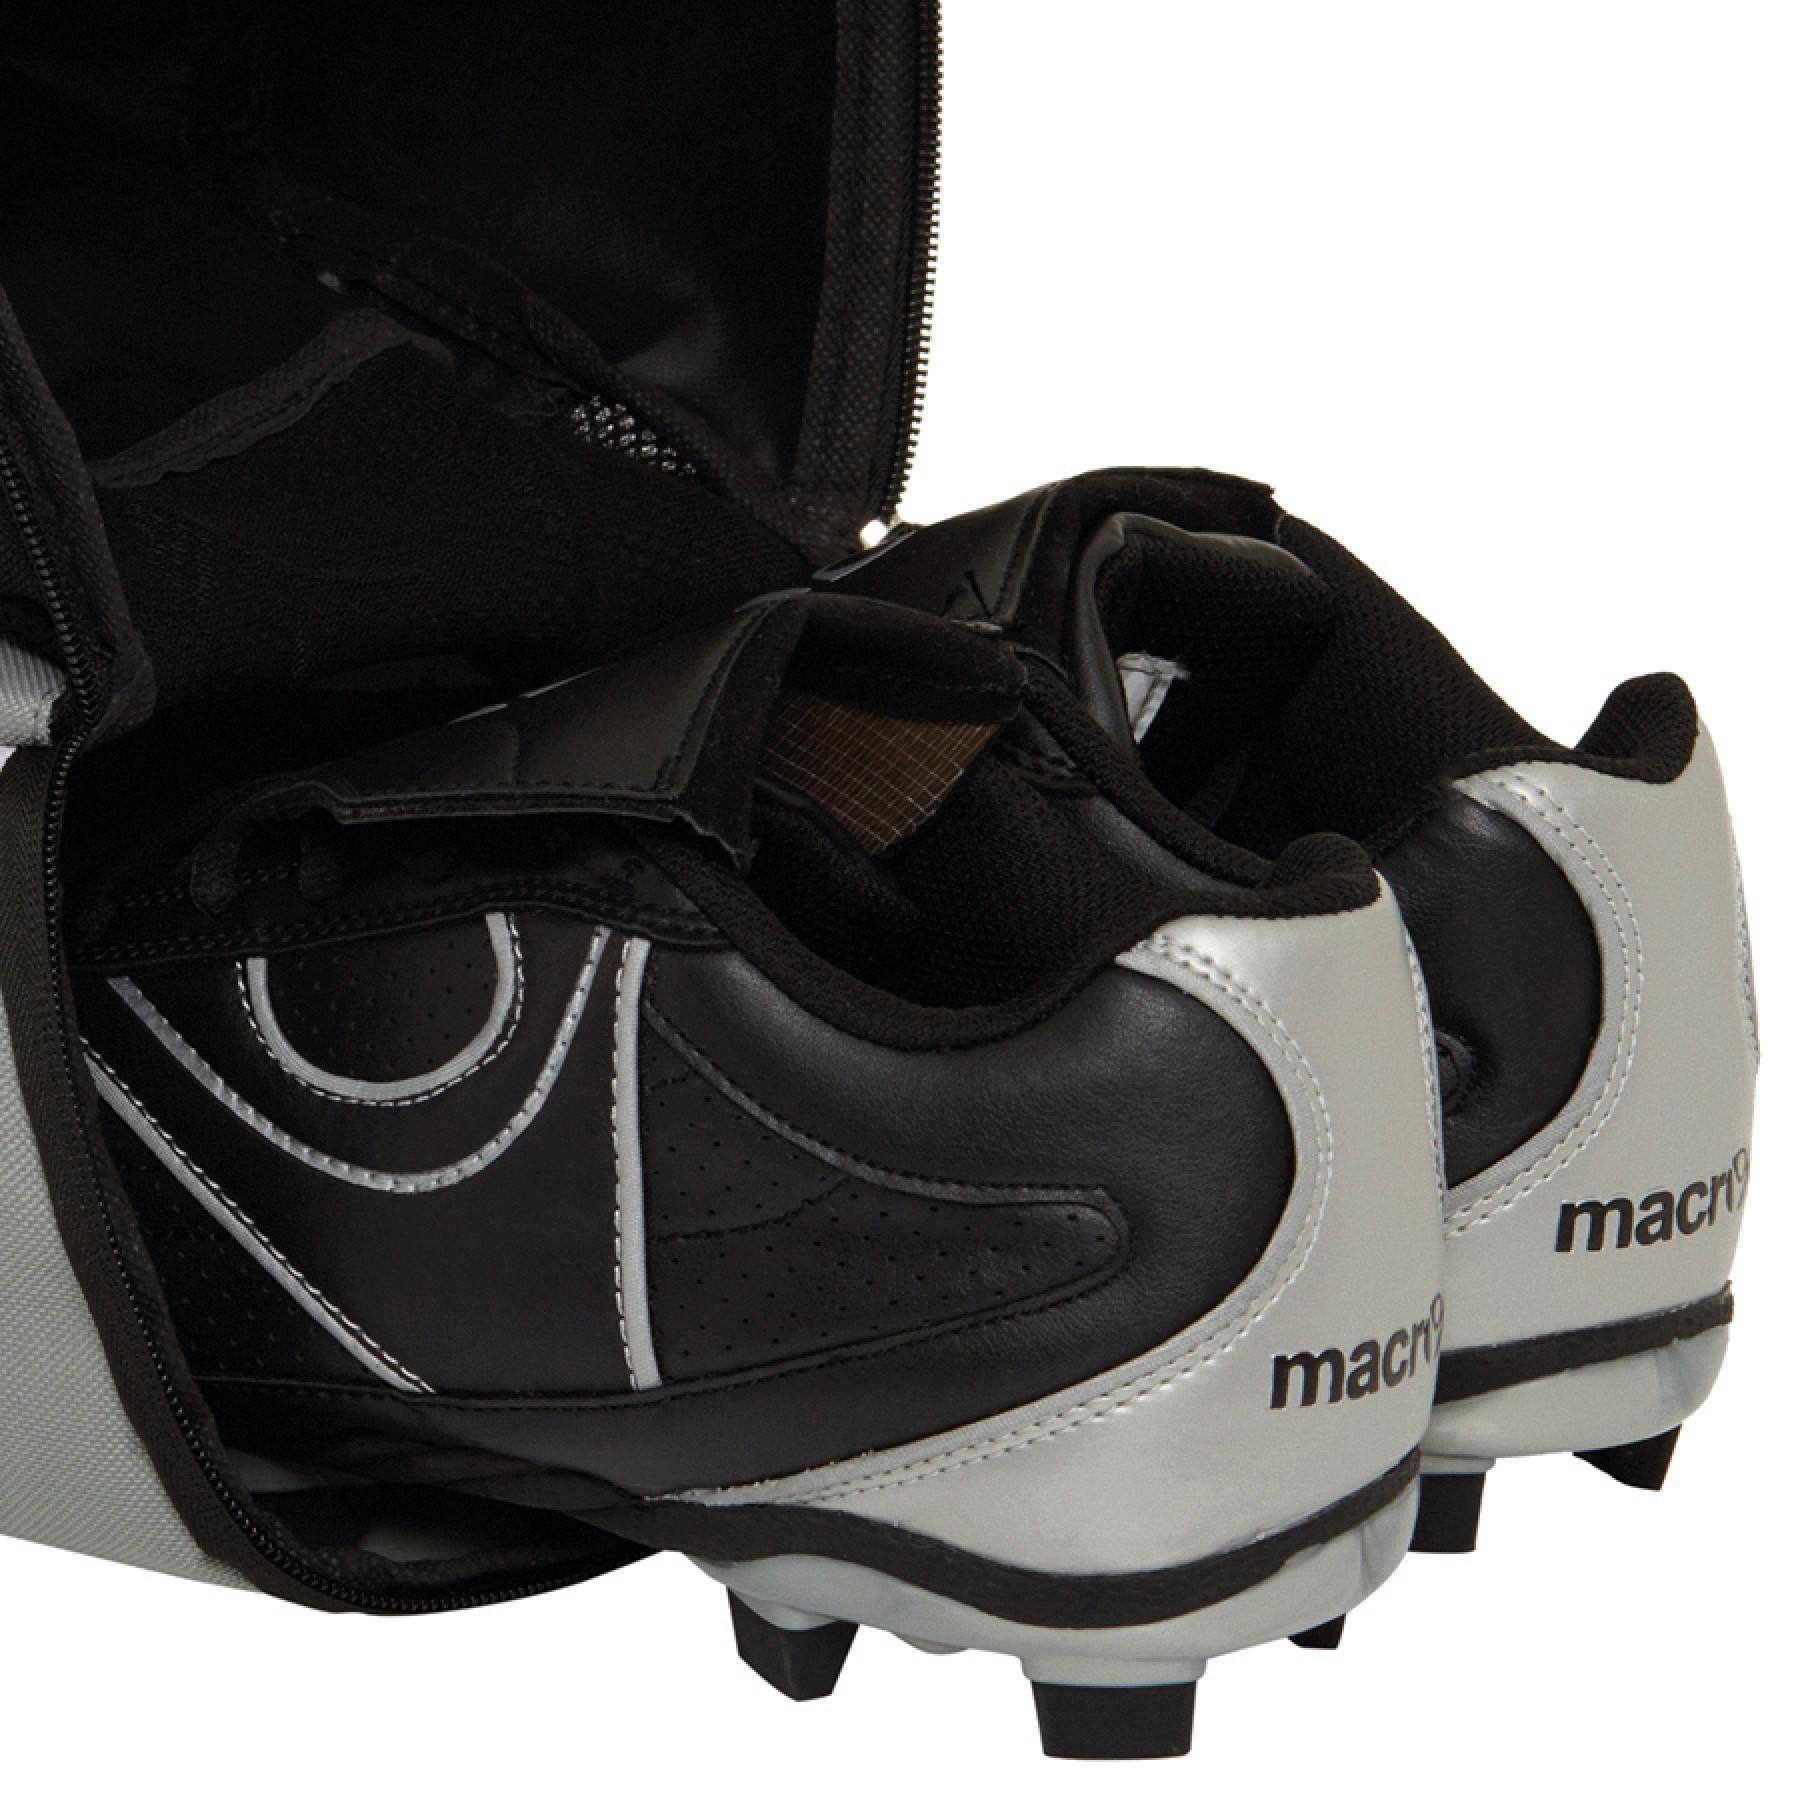 macron football boots